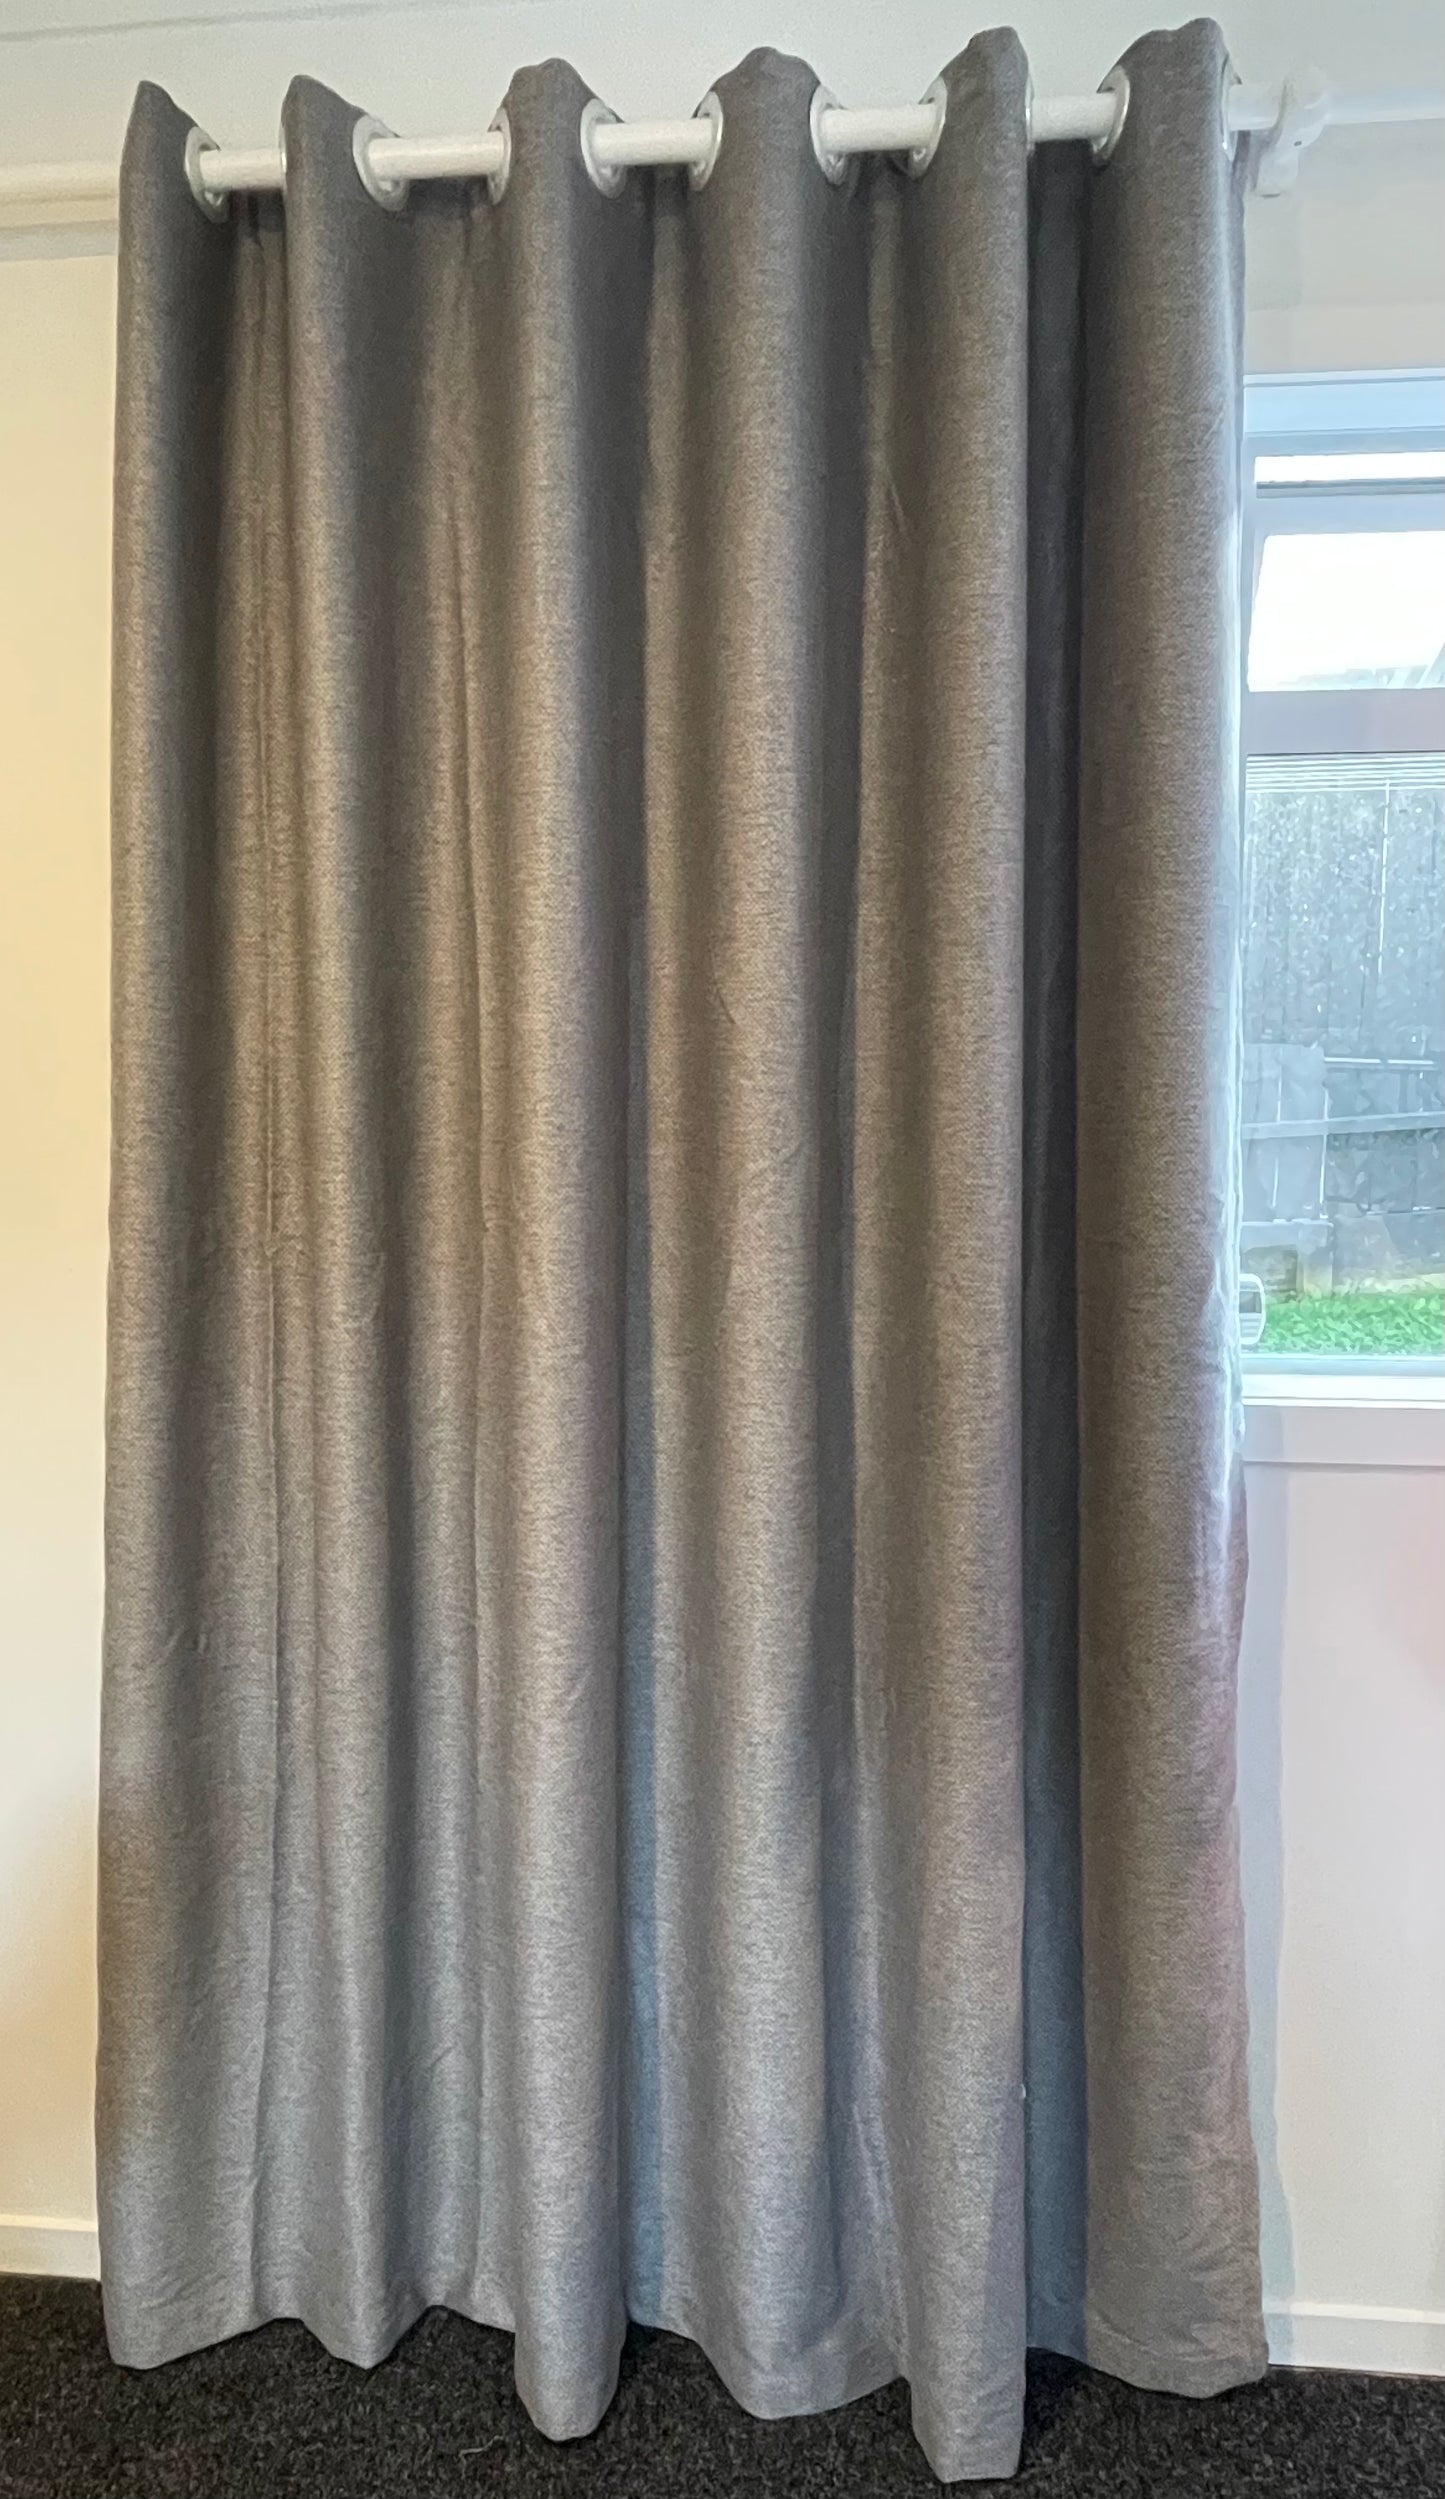 New Readymade curtains - Ready made - RM-0002-Grey